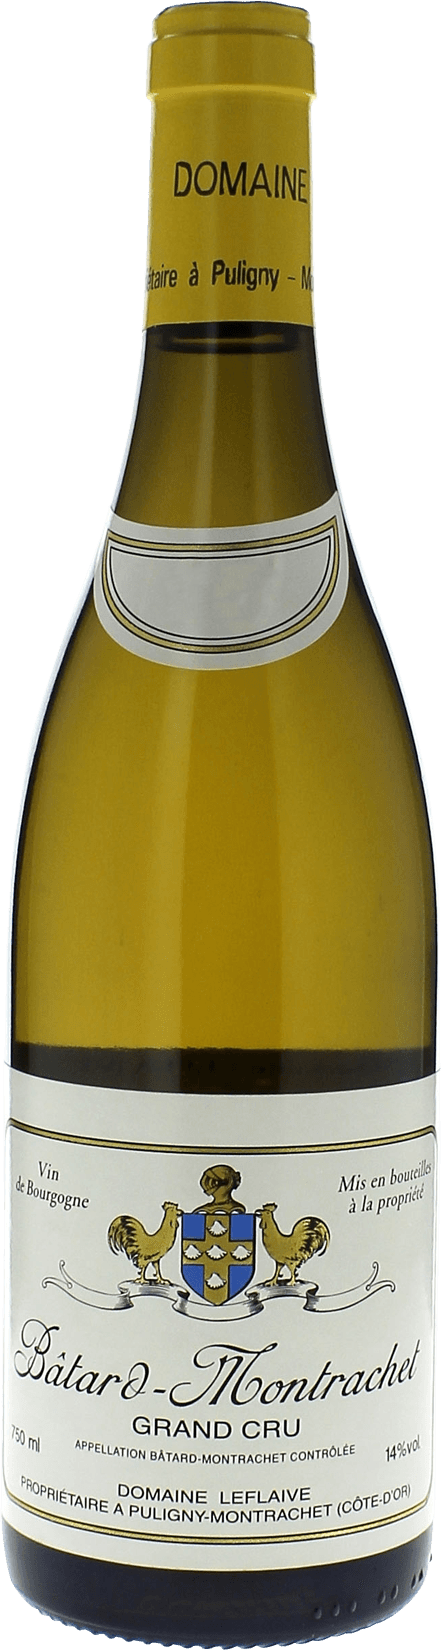 Batard montrachet grand cru 2015 Domaine LEFLAIVE Vincent, Bourgogne blanc